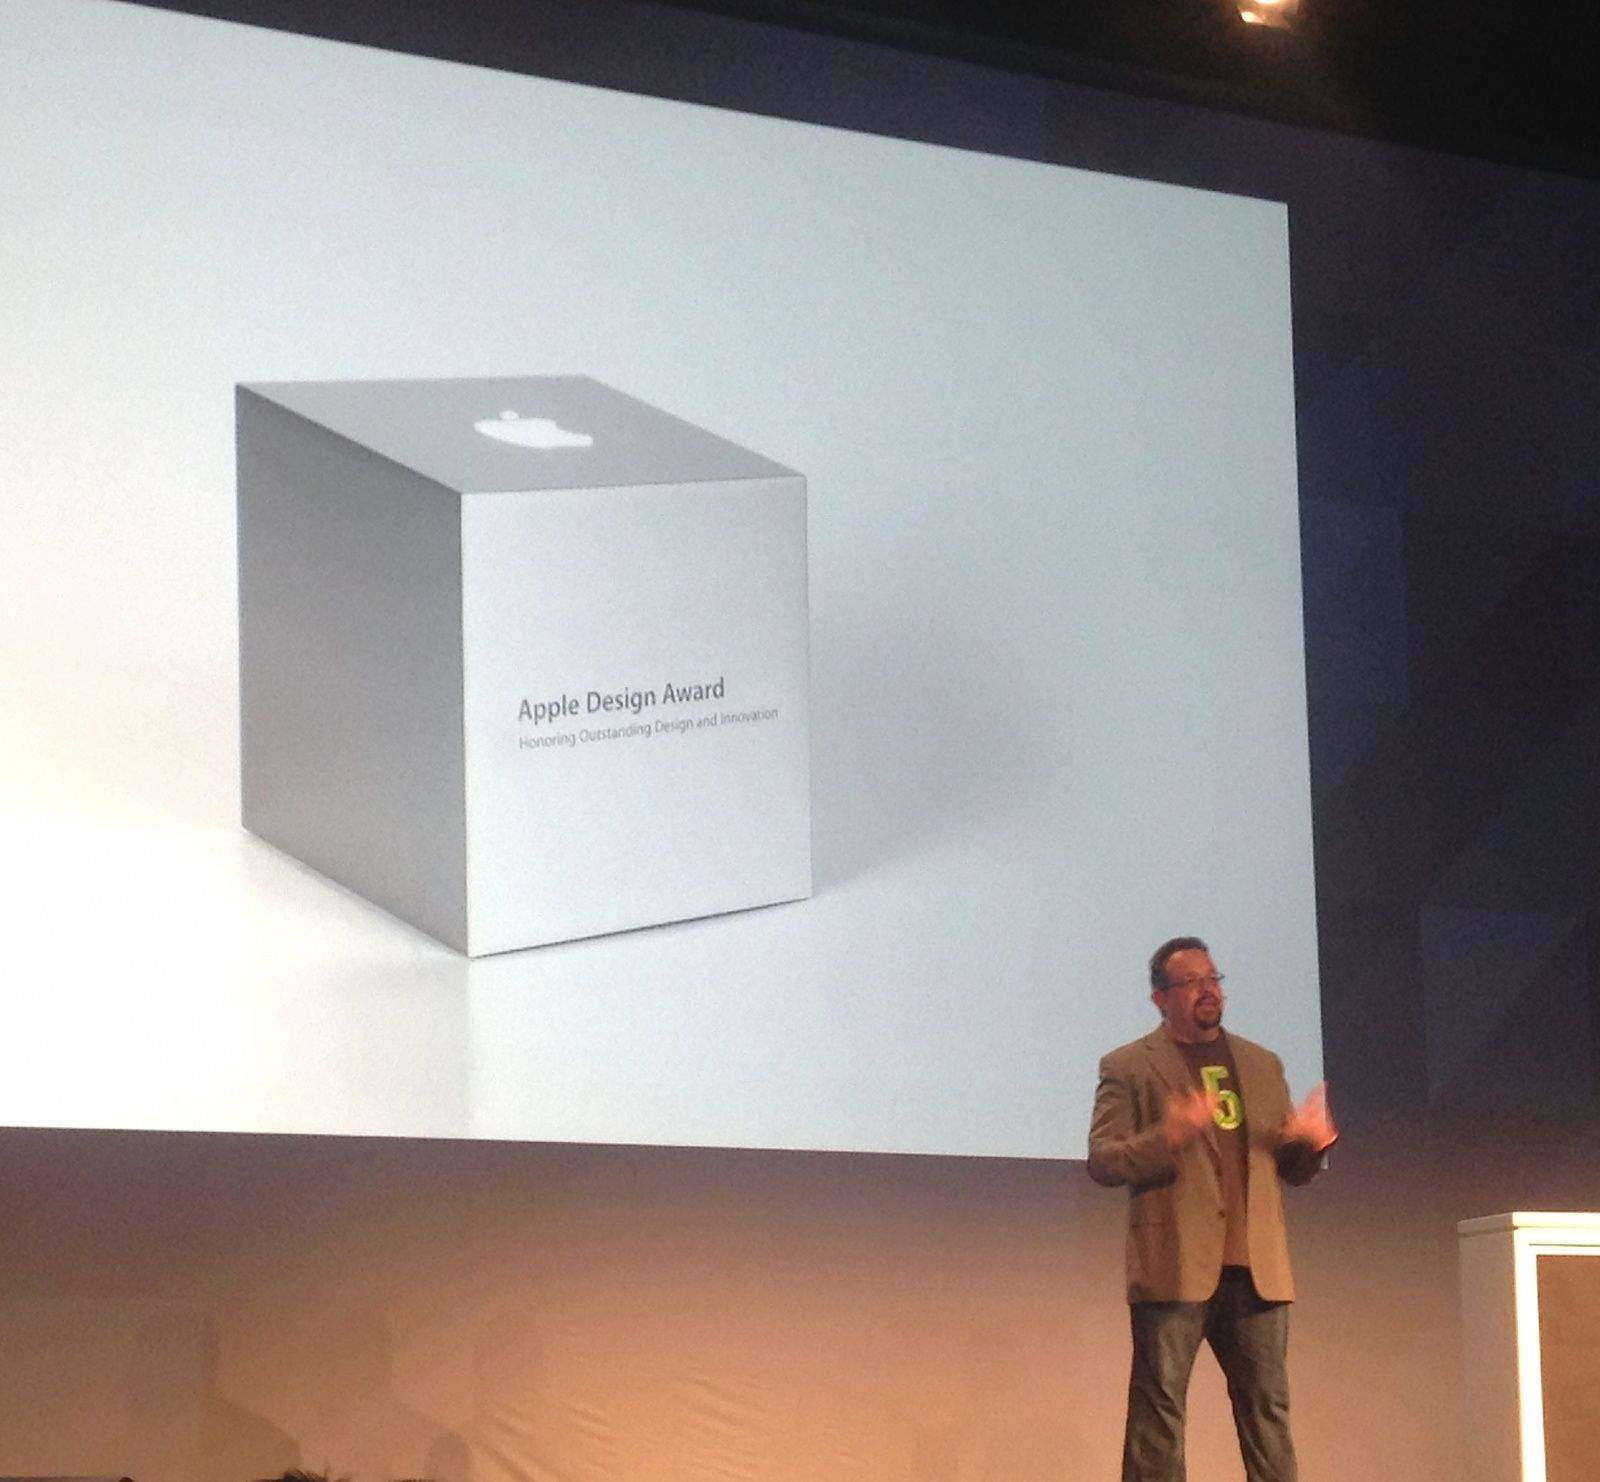 Evernote CEO Phil Libin says Apple Design Award 